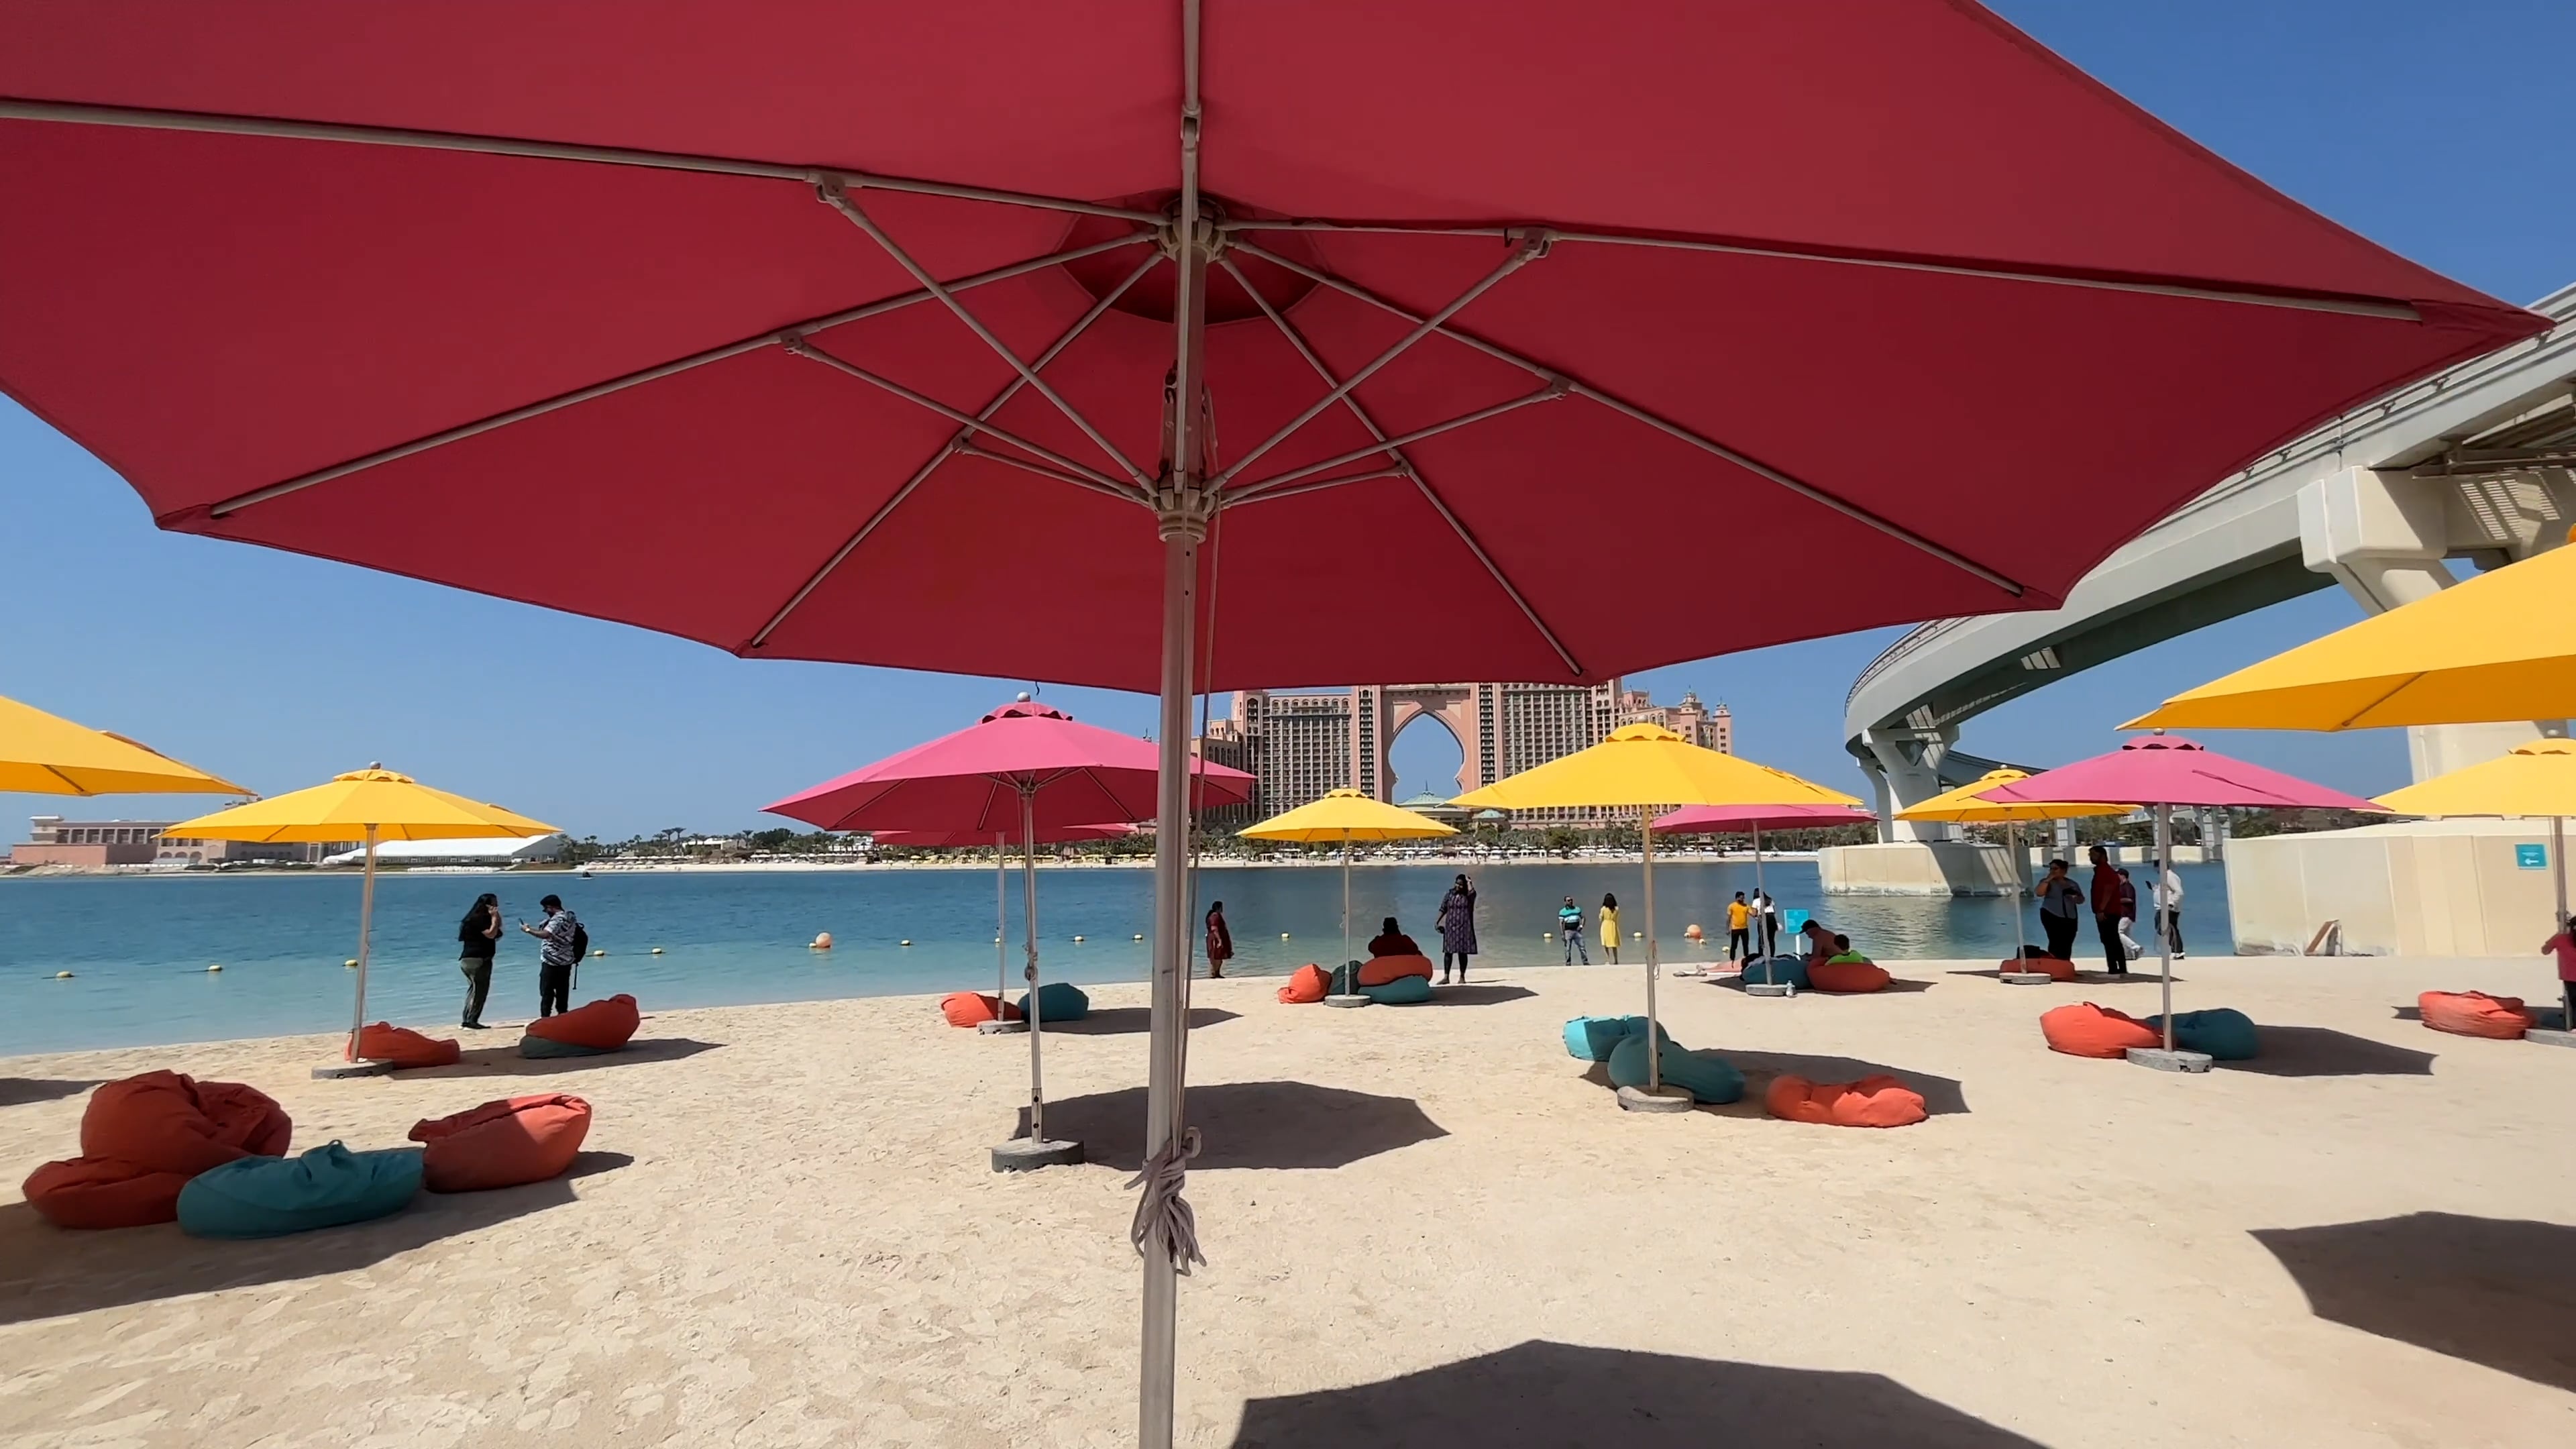 Beach Umbrella: Circular canopy mounted on a central rod, Recreation. 3840x2160 4K Background.